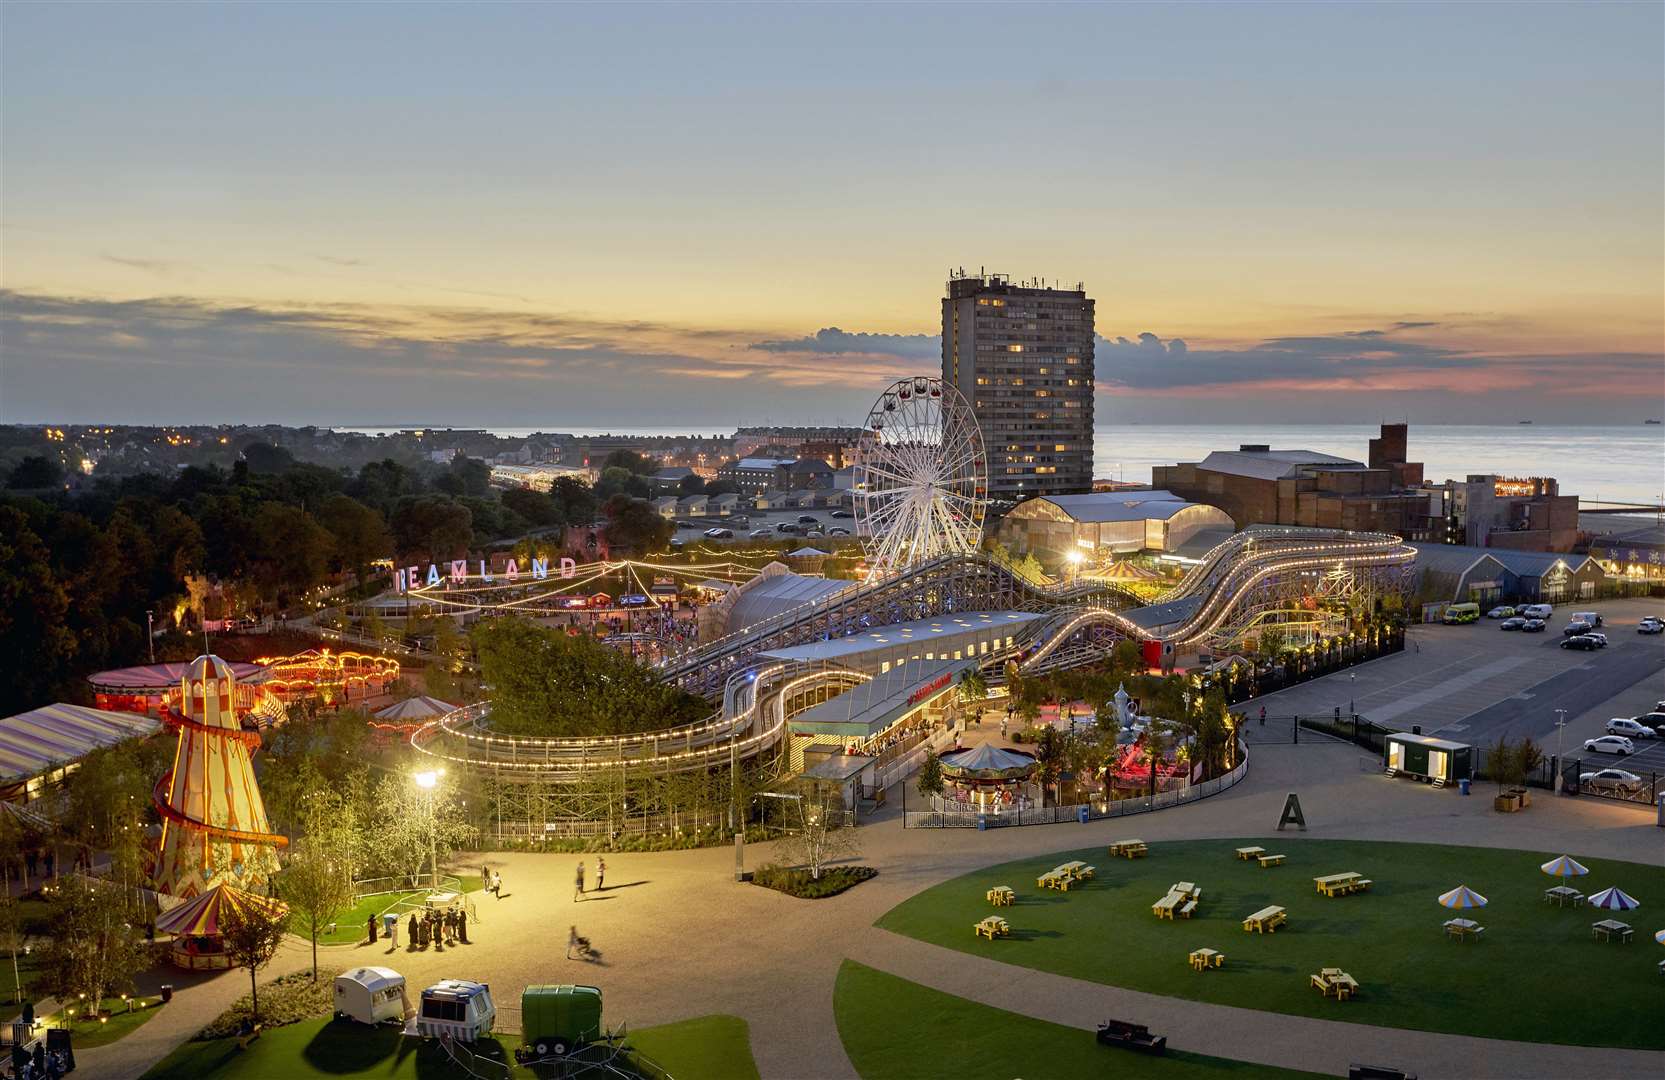 Dreamland Margate has had more than 600,000 visitors so far this year